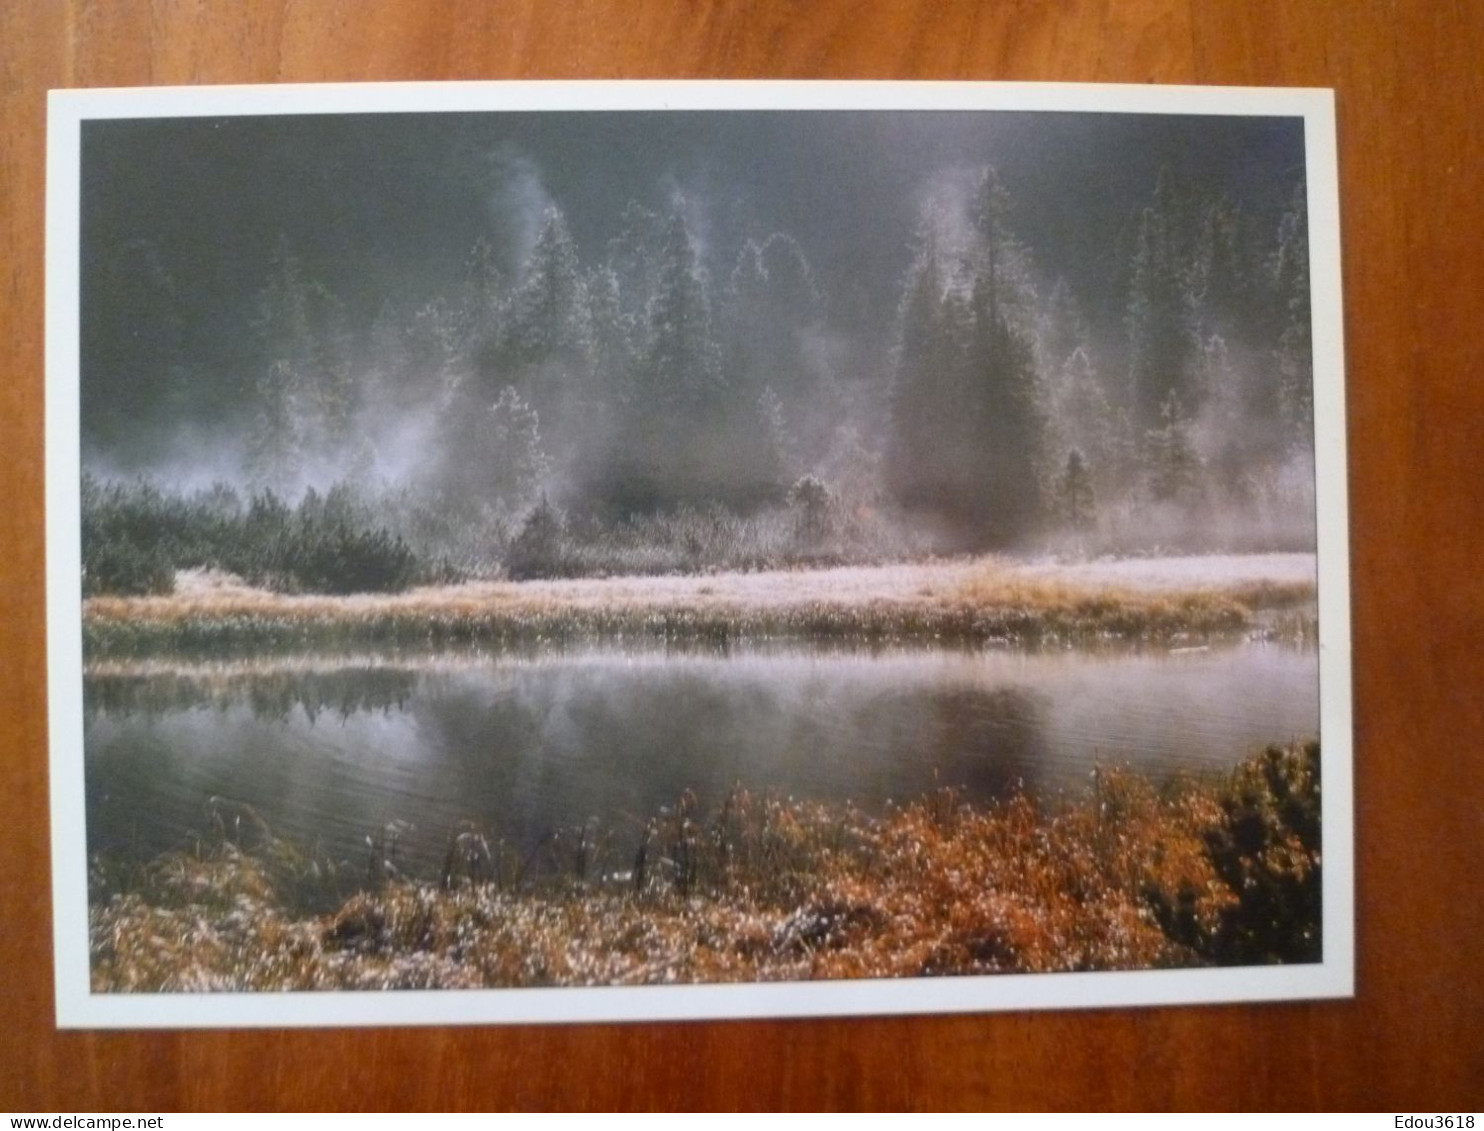 Carte Postale M13 Tatra Mountains Ryszard Ziemak In The Valley Of The Fish Stream Malopolska Poligrafia - Polen